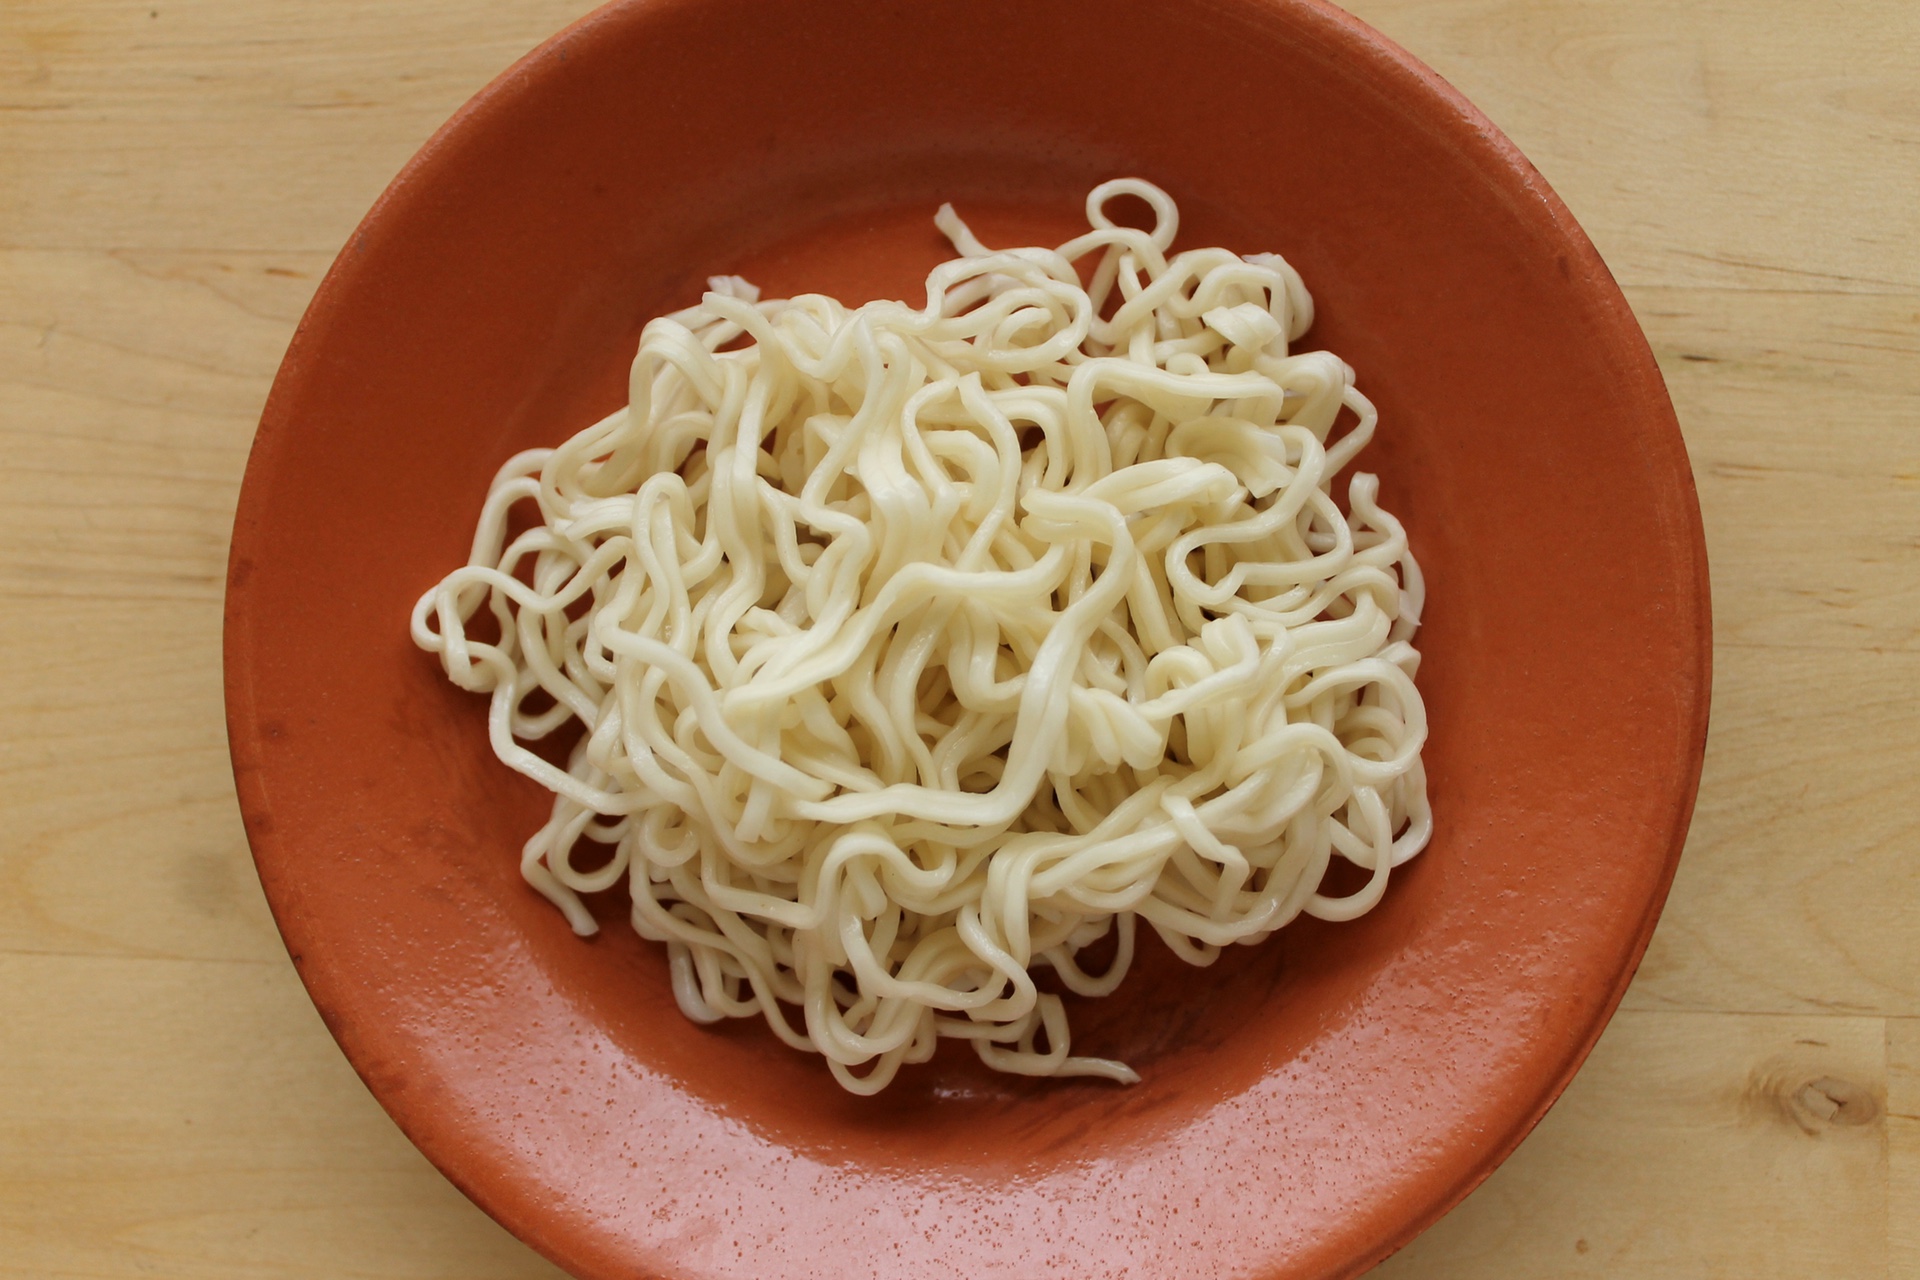 Koyo makes dried, non-fried ramen noodles similar to Shirakiku (above).